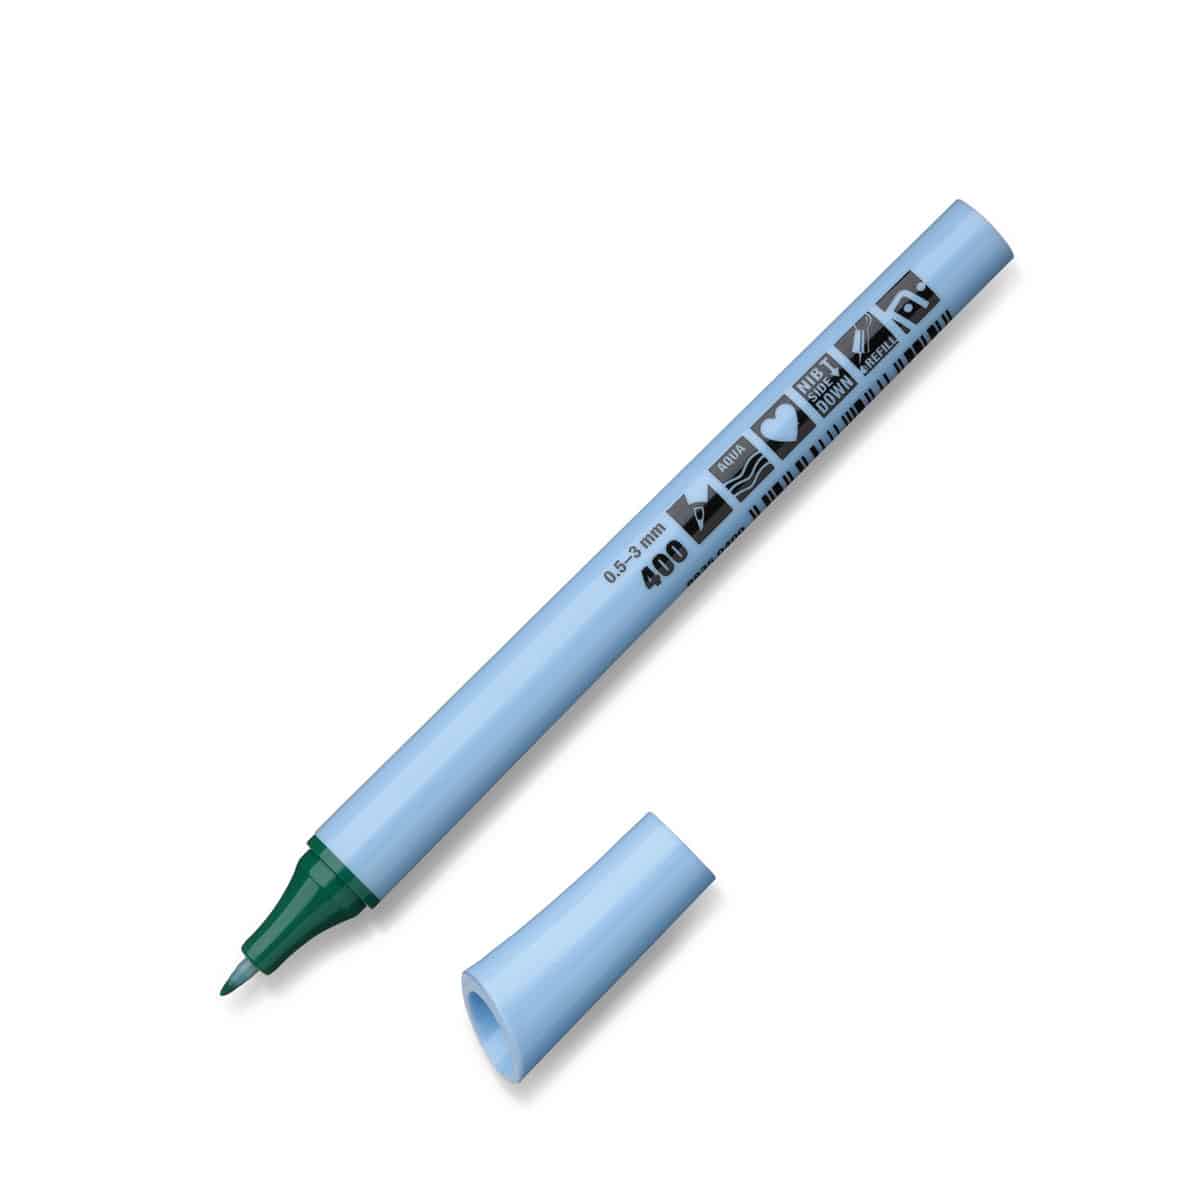 Neuland FineOne® Flex, flexible fiber nib 0.5-3 mm, single colors- 400 grün